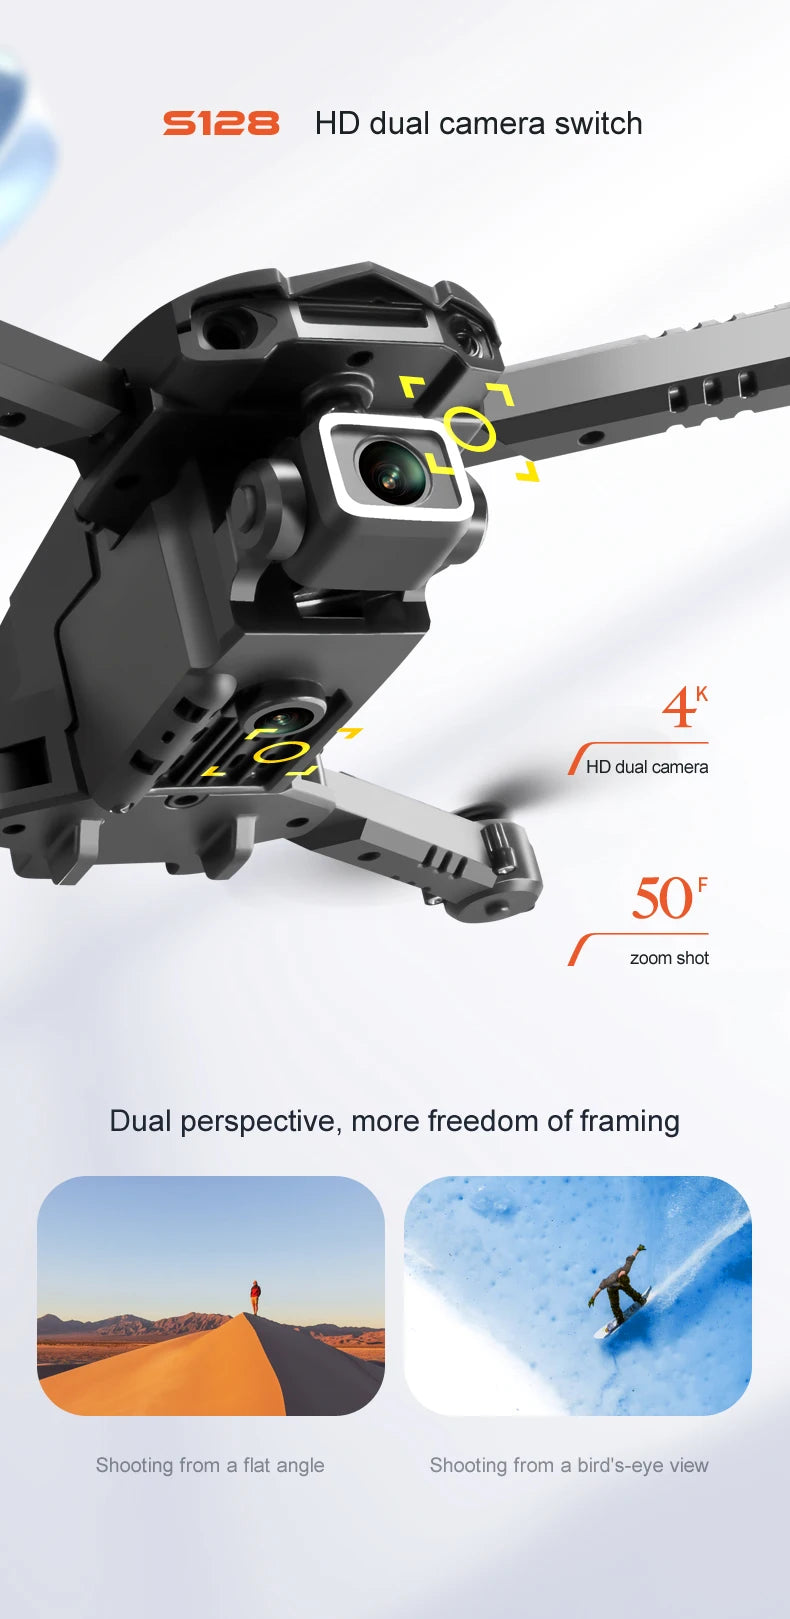 S128 Drone, dual camera switch 4k hd dual camera 50f zoom shot